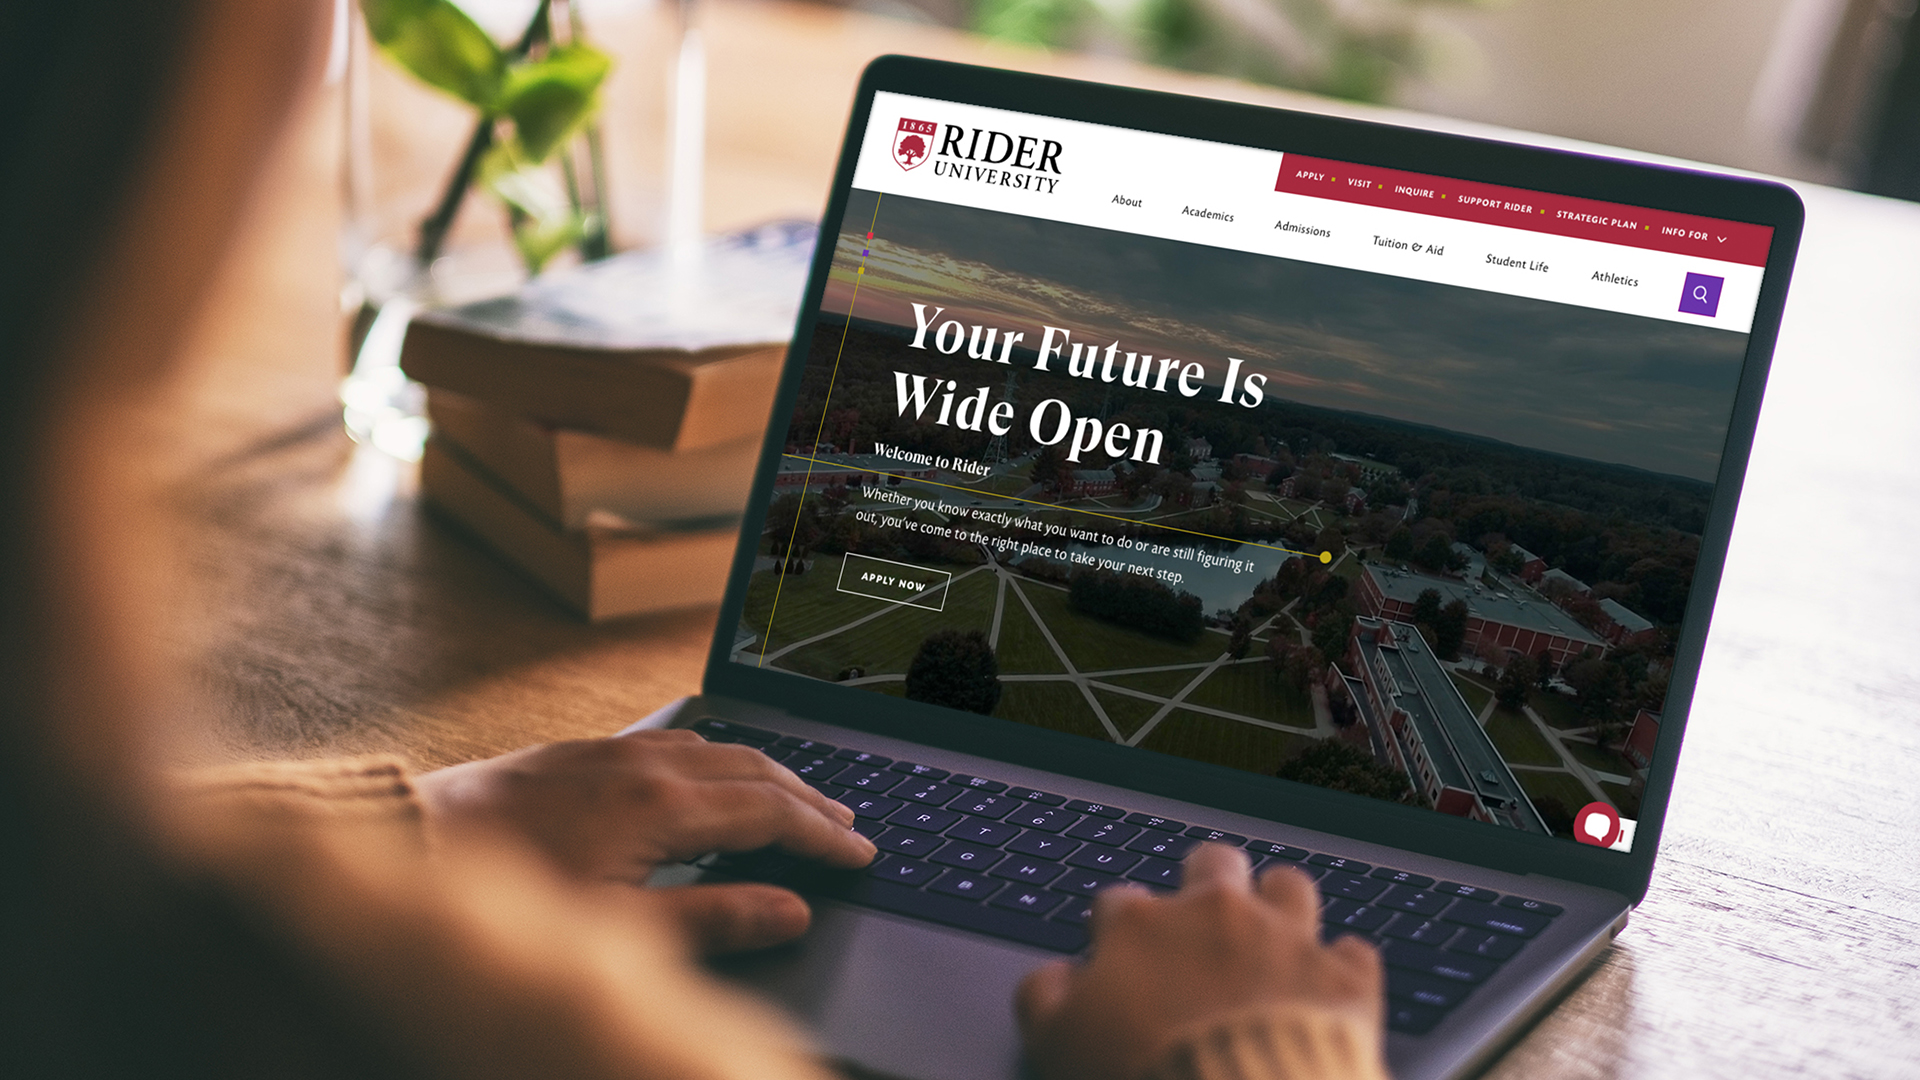 Rider University's new website homepage